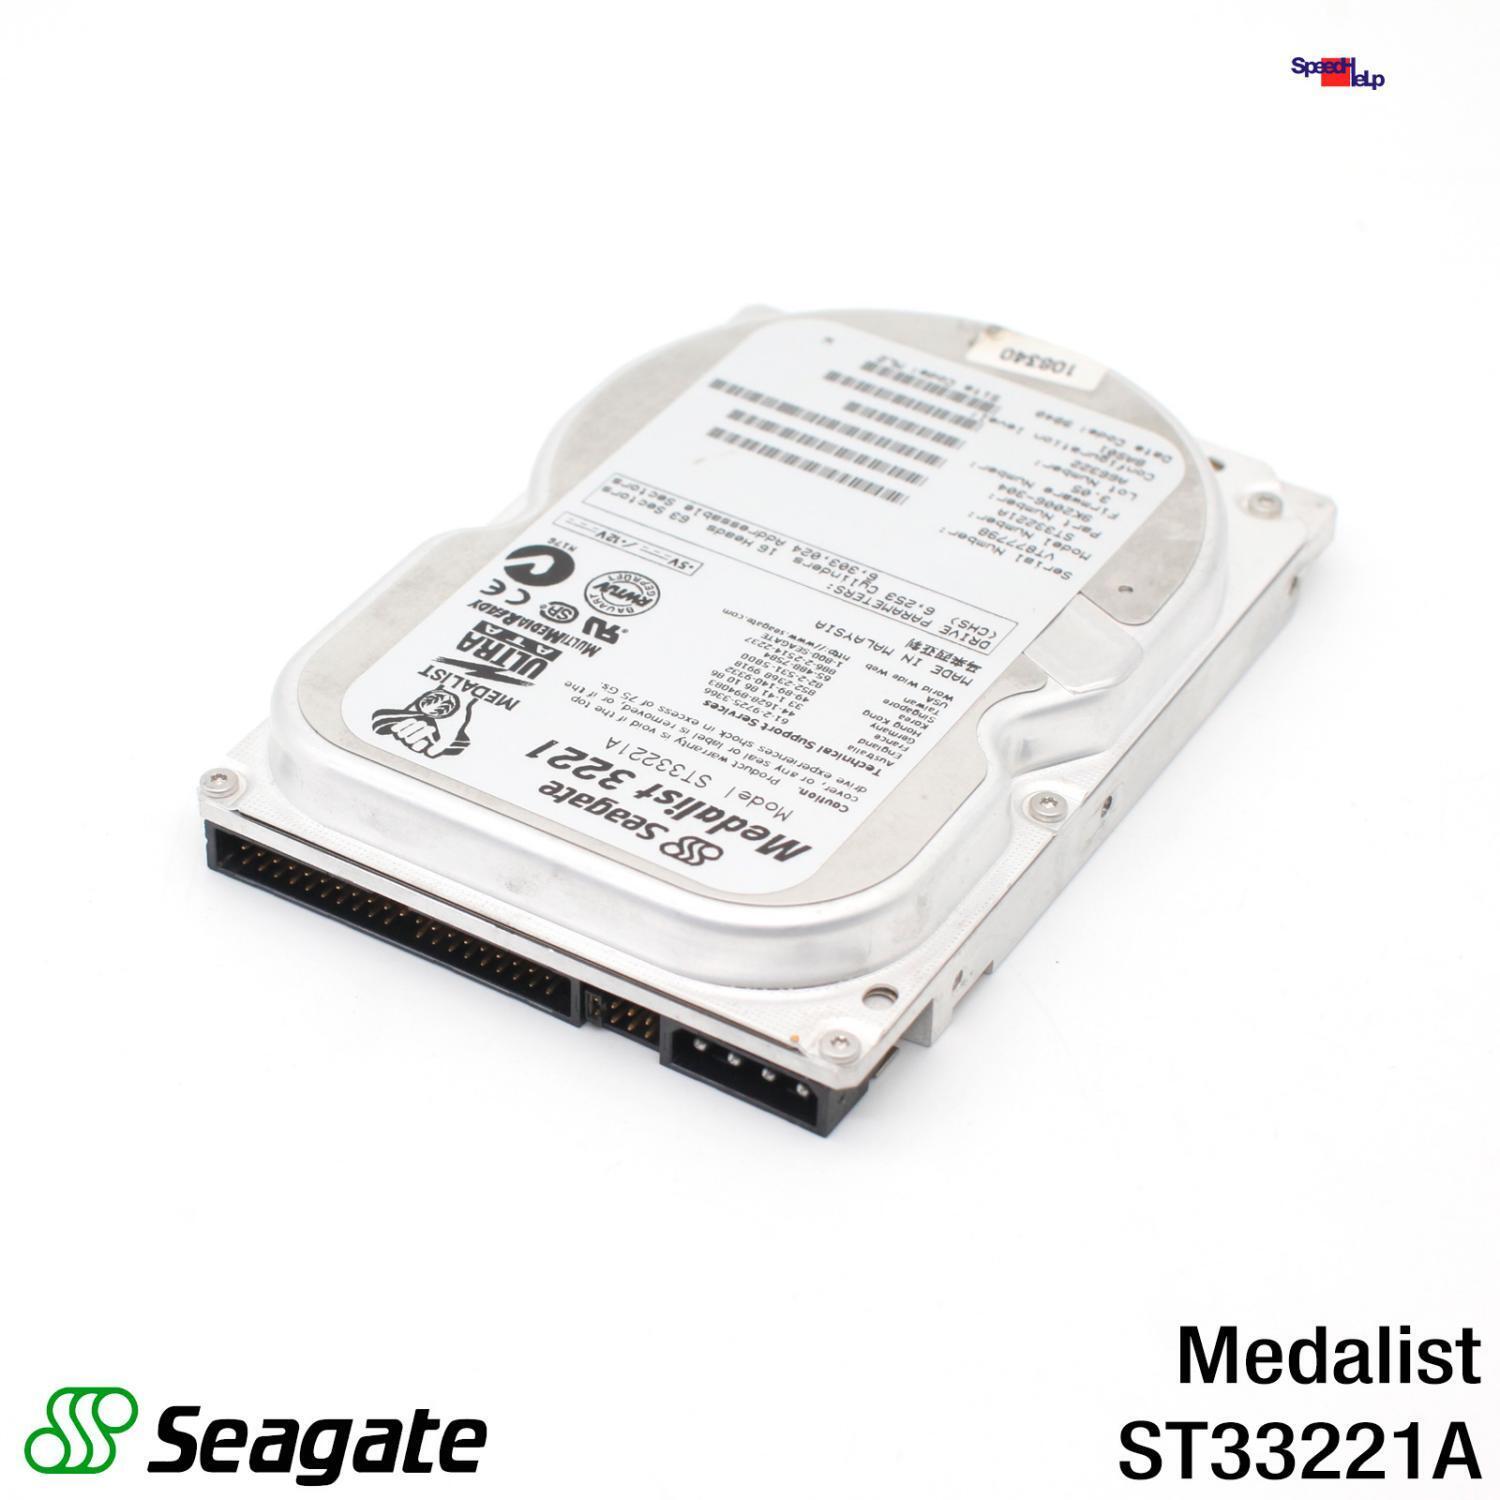 Seagate Medalist 3221 ST33221A 3.2GB HDD Hard Drive Hard Disk Drive Ide 40-PIN